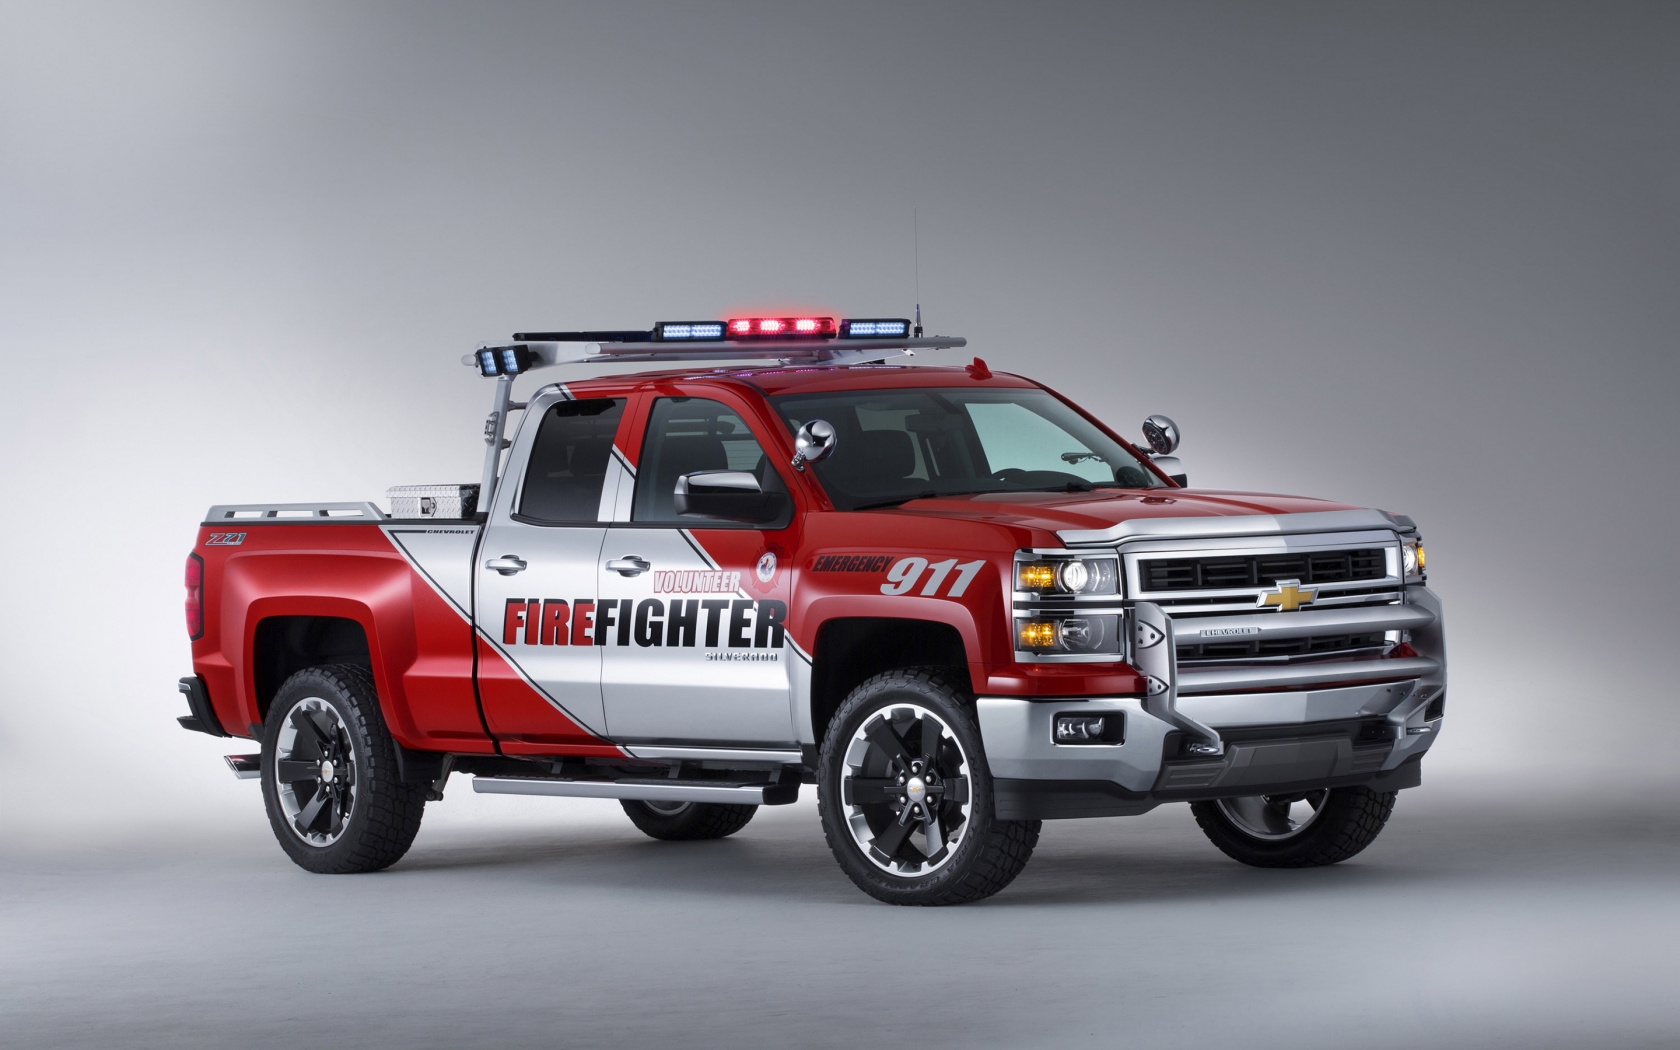 Chevrolet Silverado Volunteer Firefighters Concept for 1680 x 1050 widescreen resolution